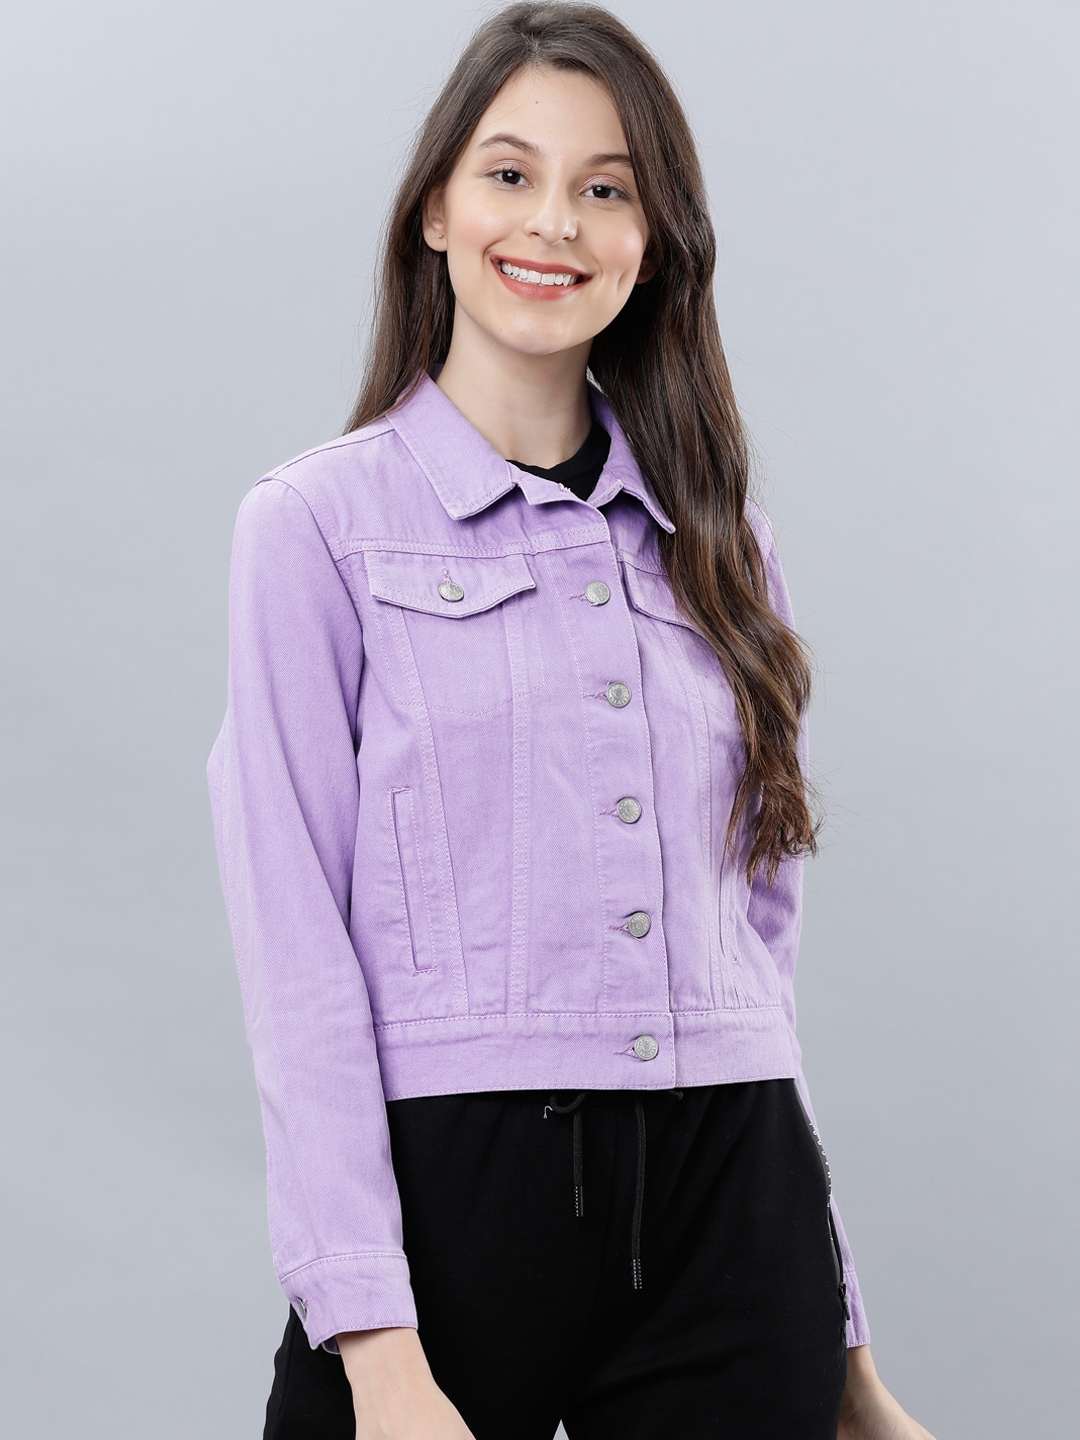 Jackets & Overcoats | Brand New Denim Jacket For Teenage Girl | Freeup-hangkhonggiare.com.vn